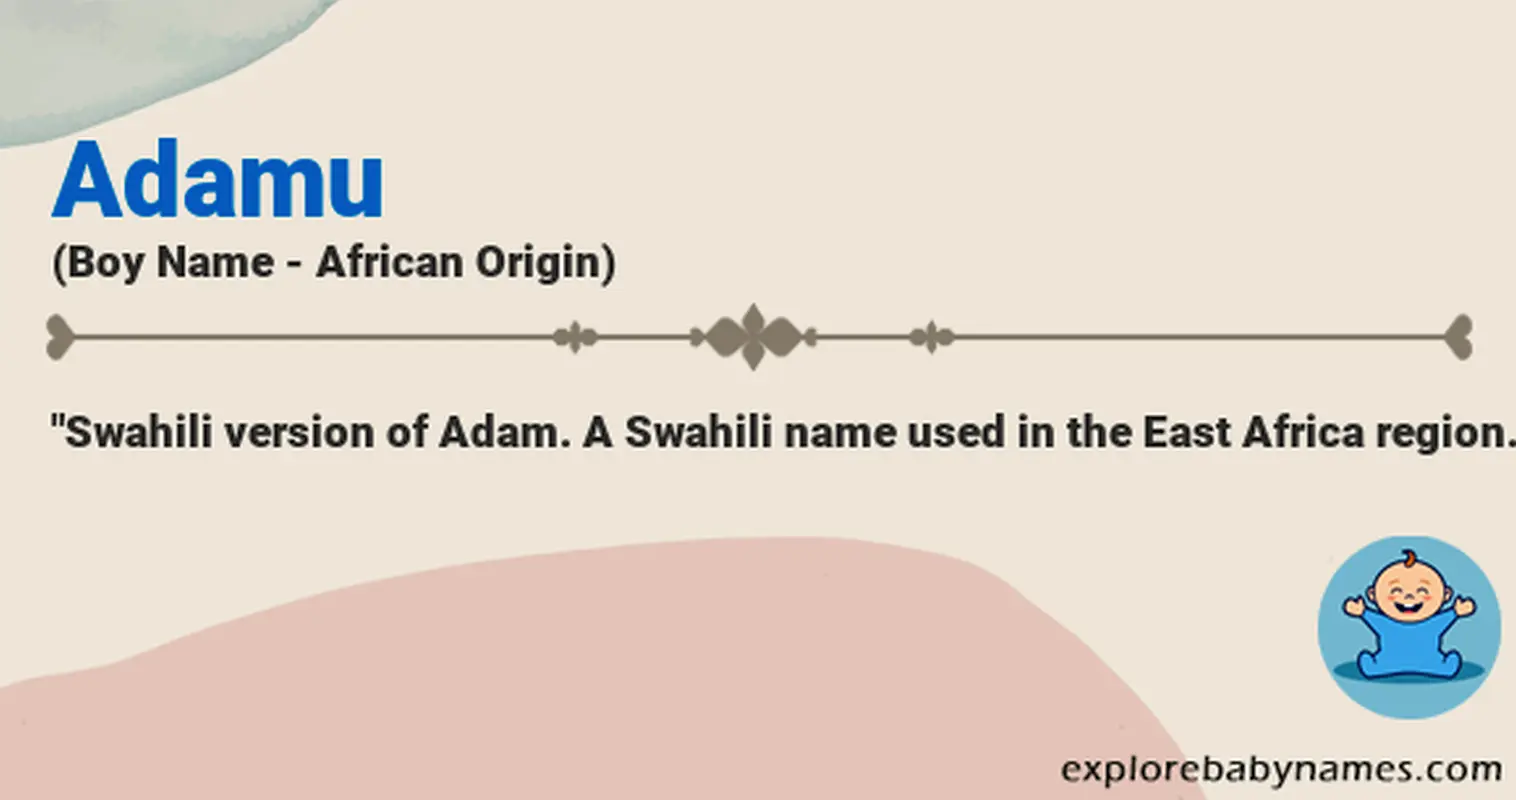 Meaning of Adamu